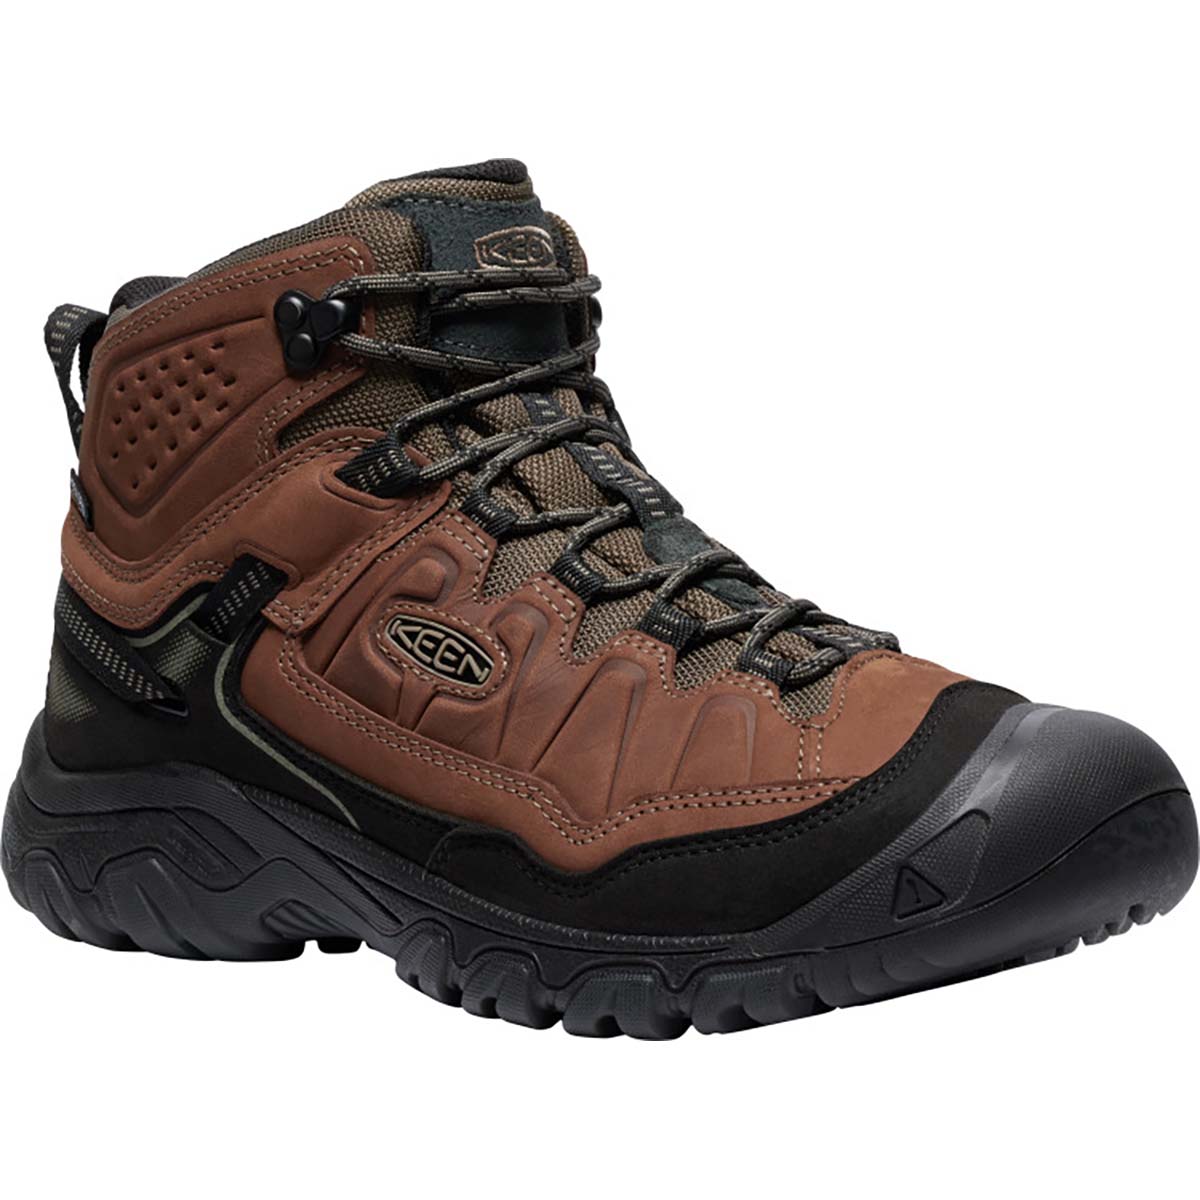 Keen Men's Targhee IV WP Hiking Boots - Wide